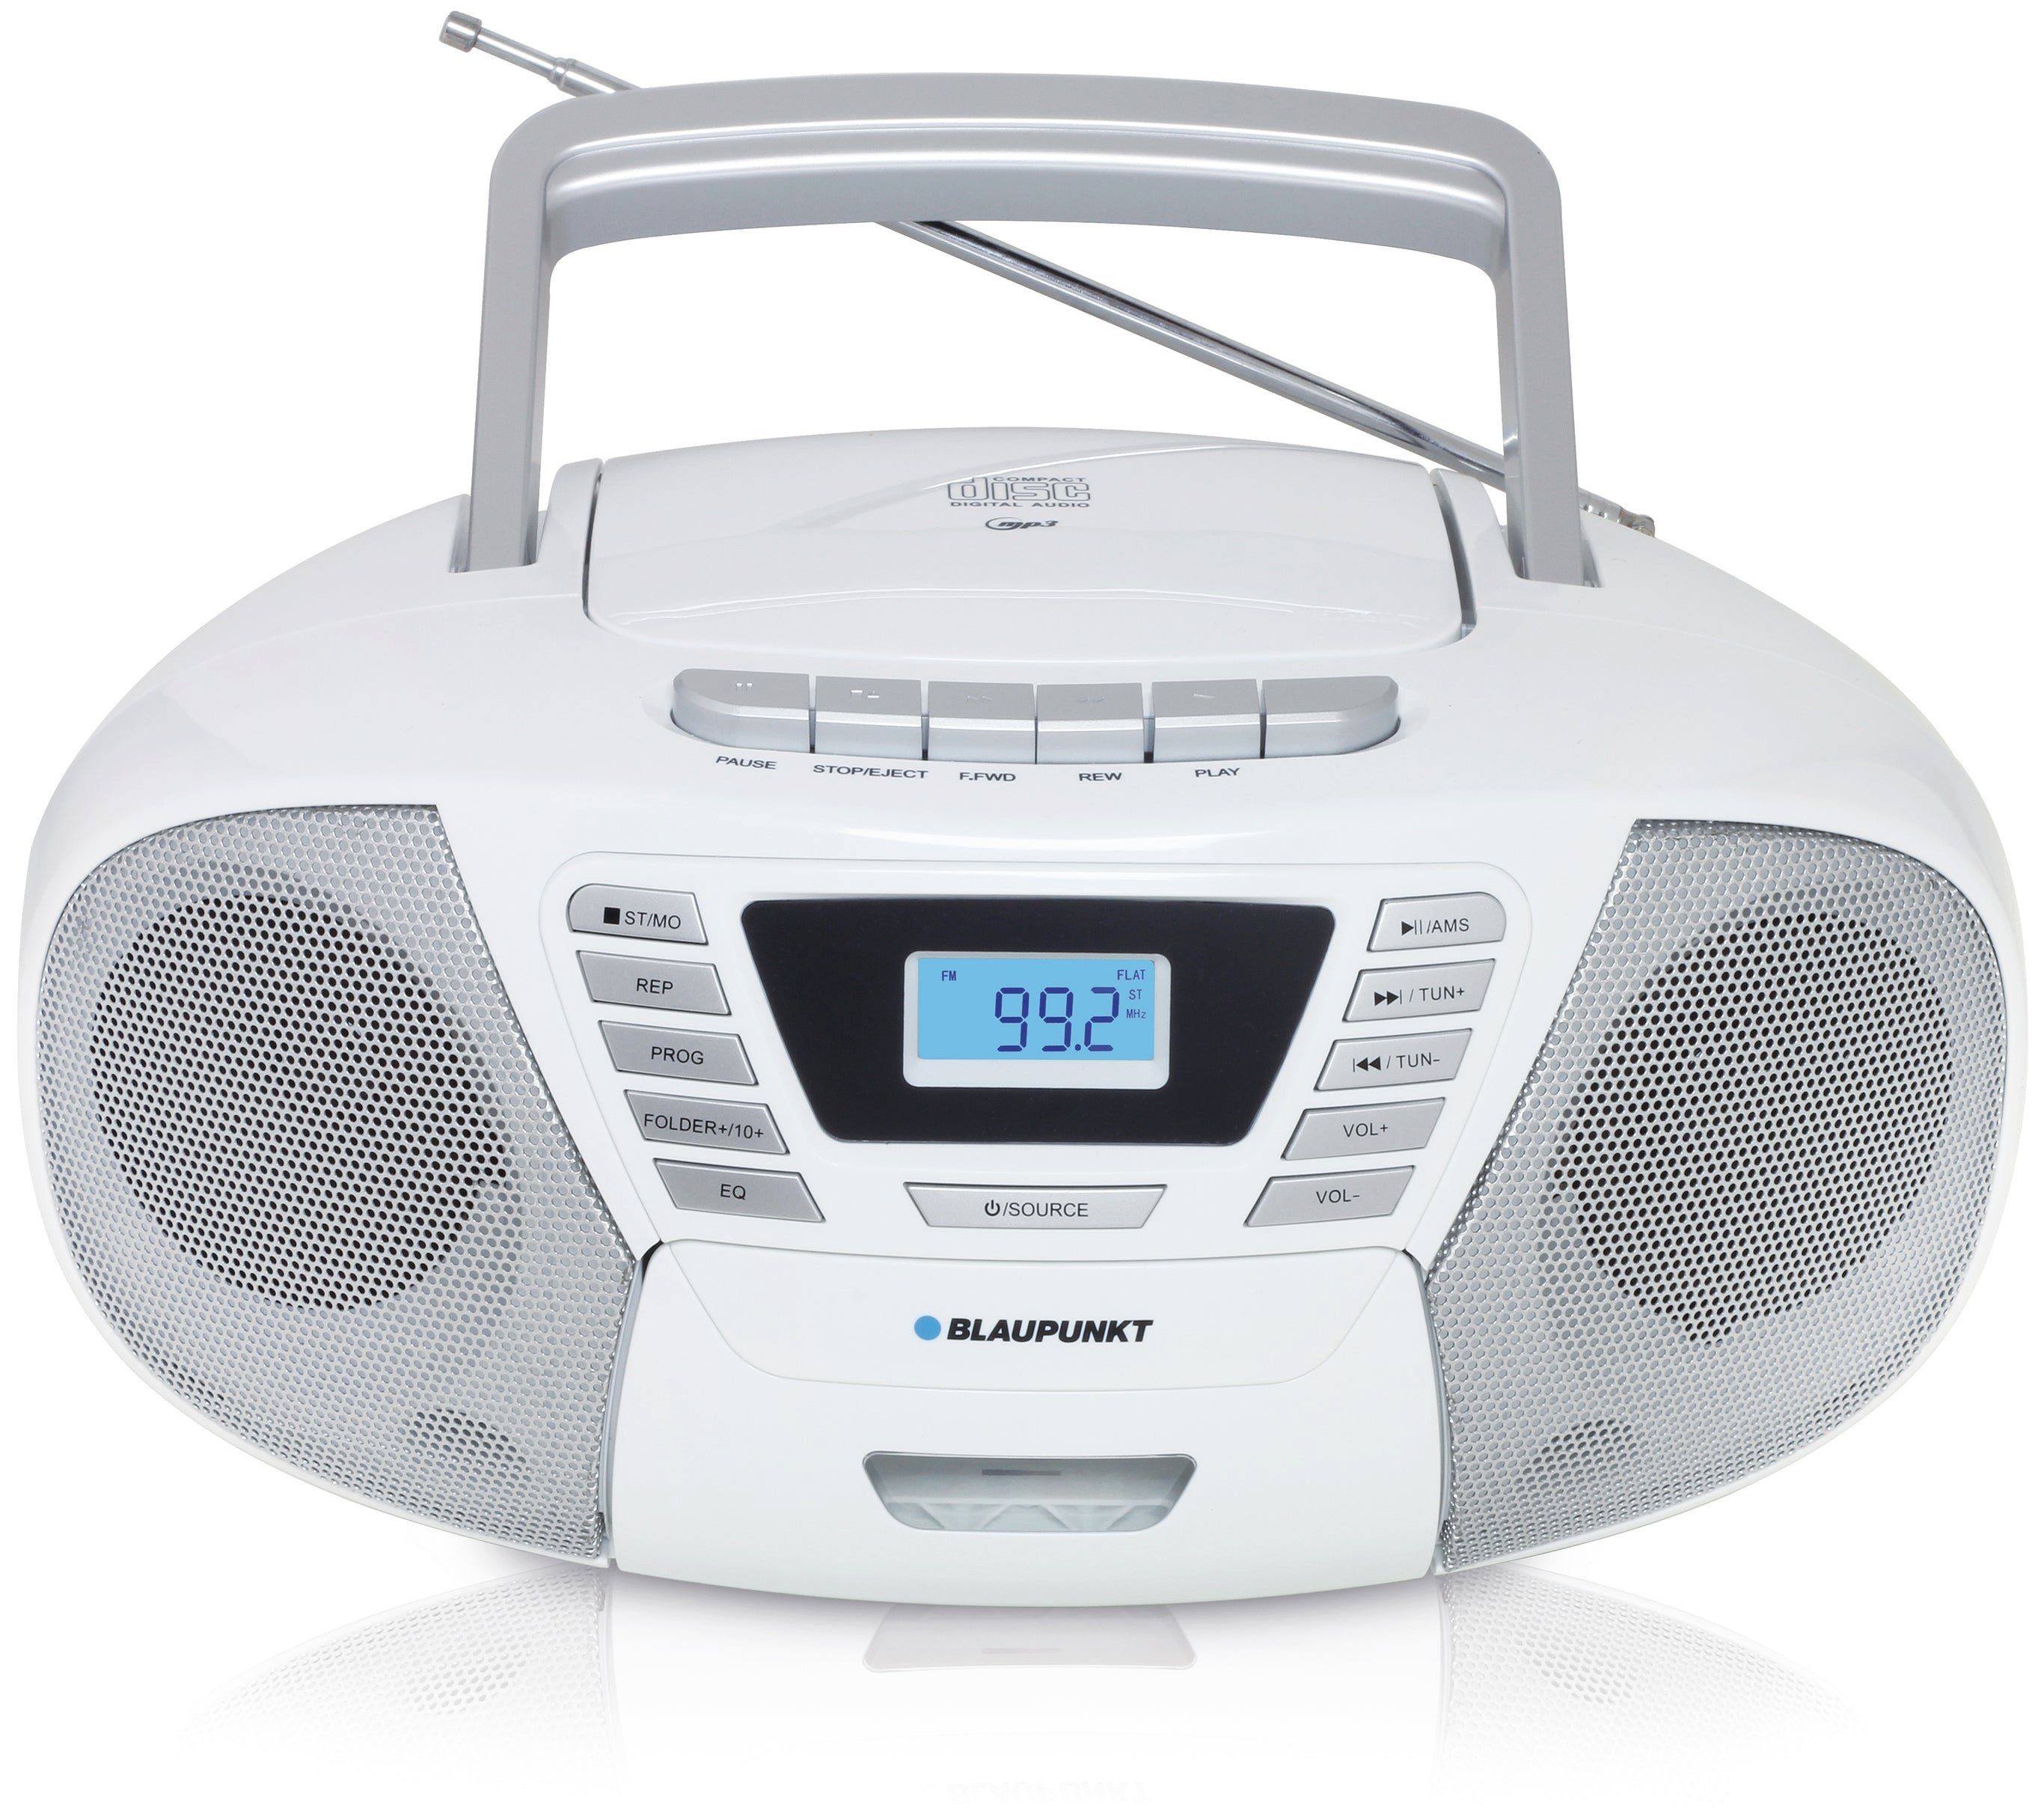 Blaupunkt B 120 Boombox (UKW, FM, 6,00 W, Hörbuchfunktion, Bluetooth, CD-Player, USB, Kassetten und Radio) weiss